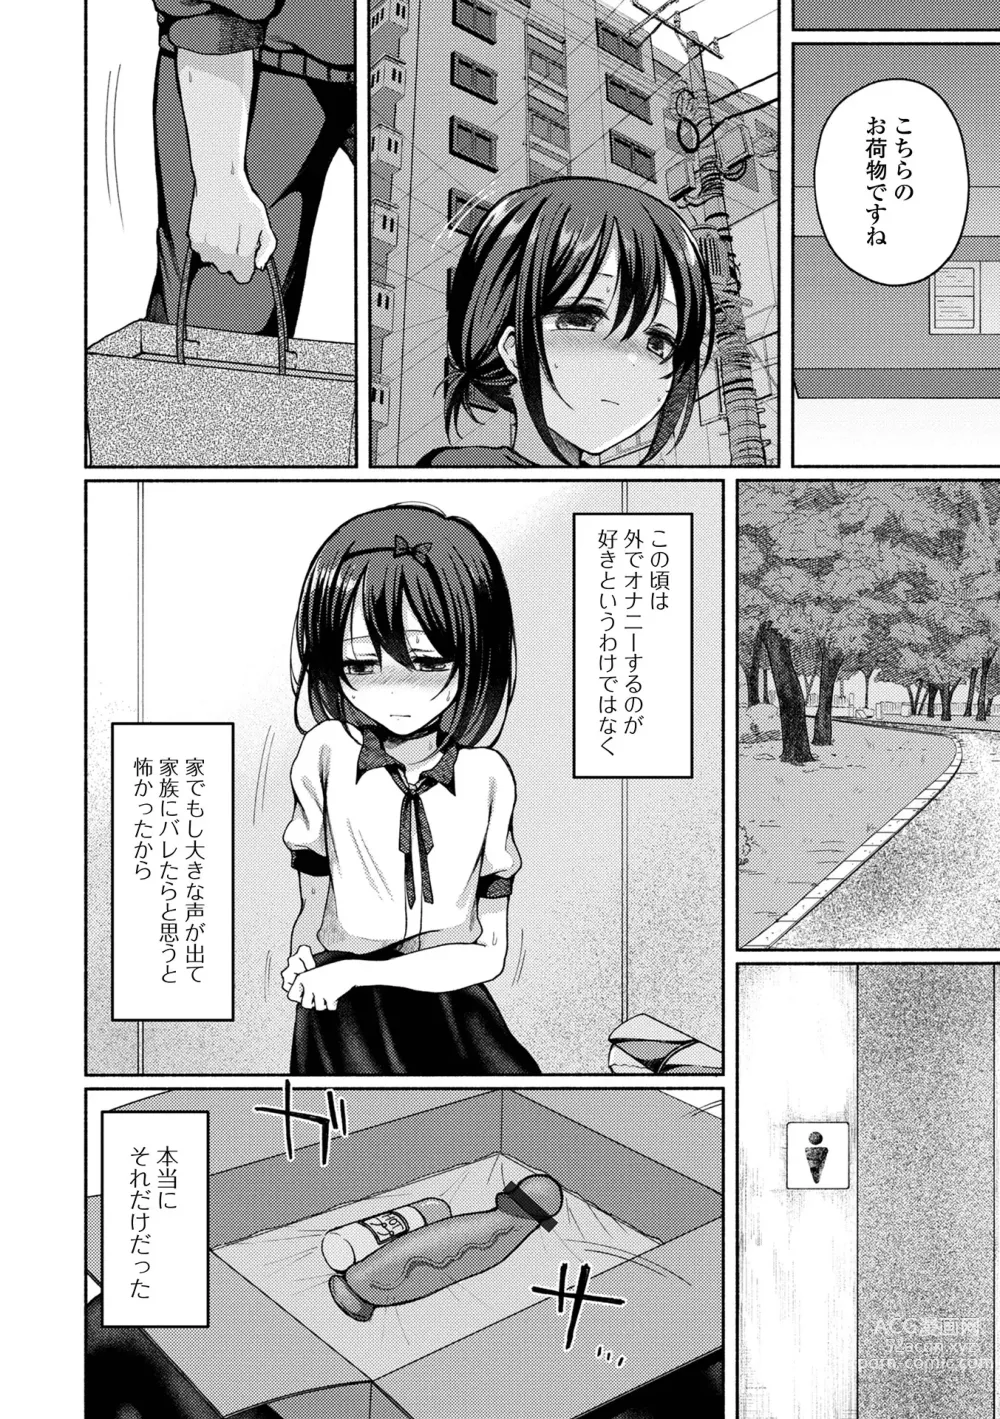 Page 12 of manga Doko demo Otokonoko